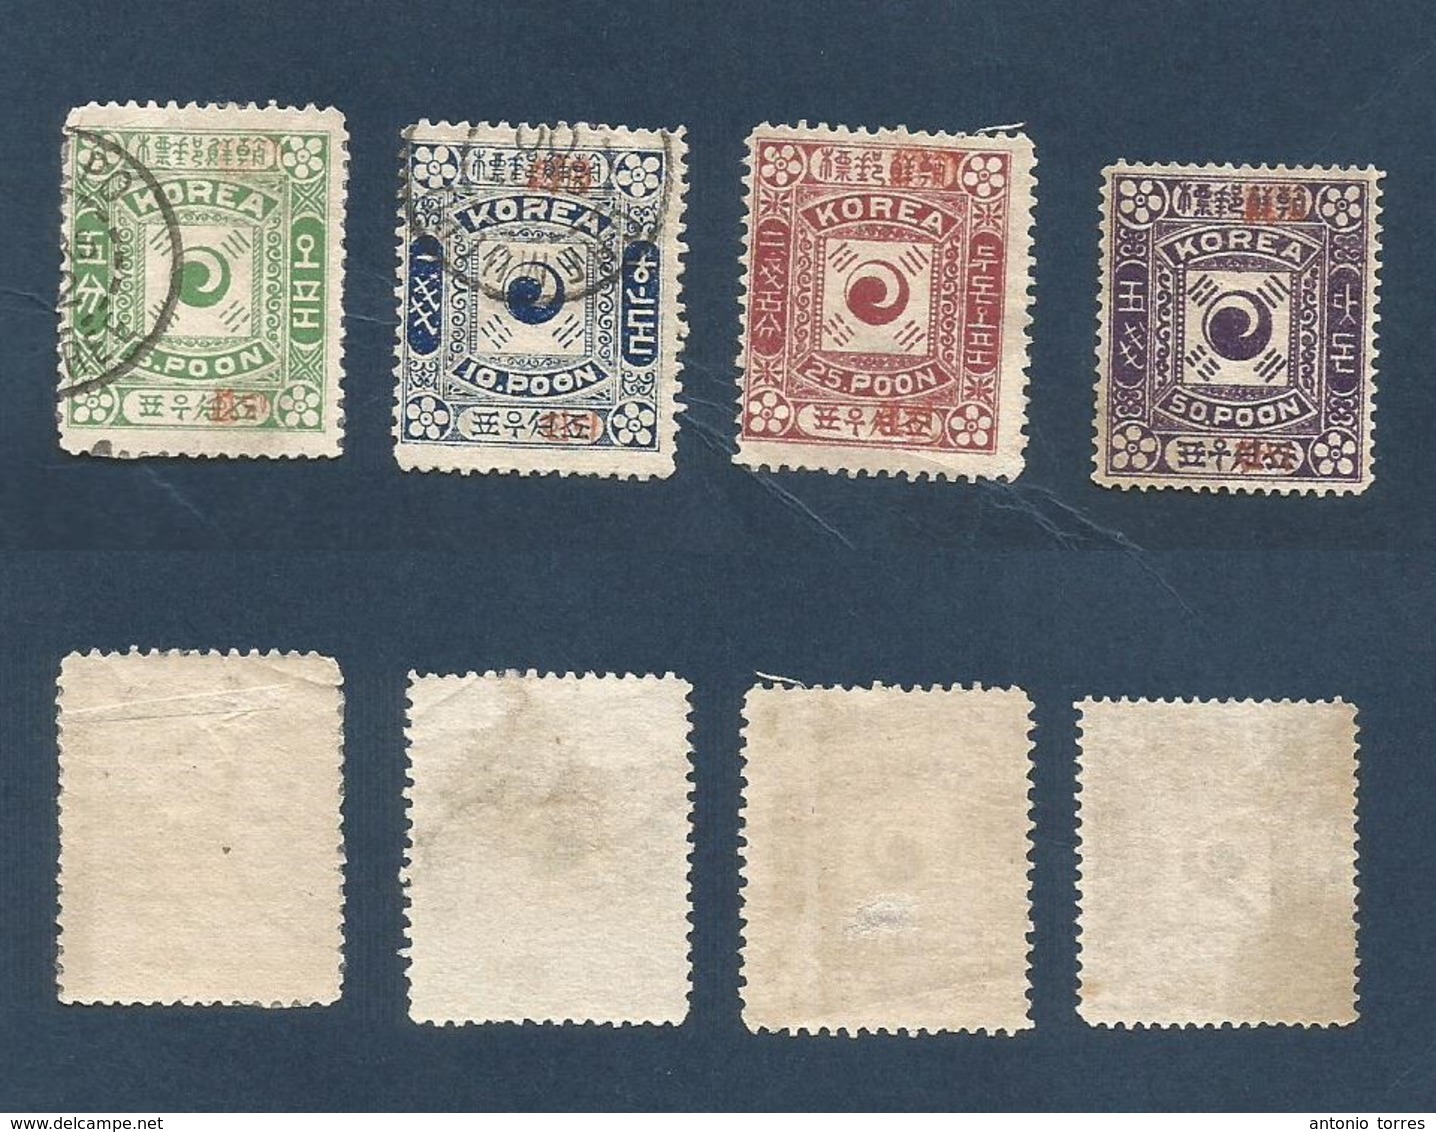 KOREA. 1897. Tae Han Ovptd SC 10/33 5p + 10p Used 25 Pt + 50p Mint. Sc $225. Very Fine Set. - Korea (...-1945)